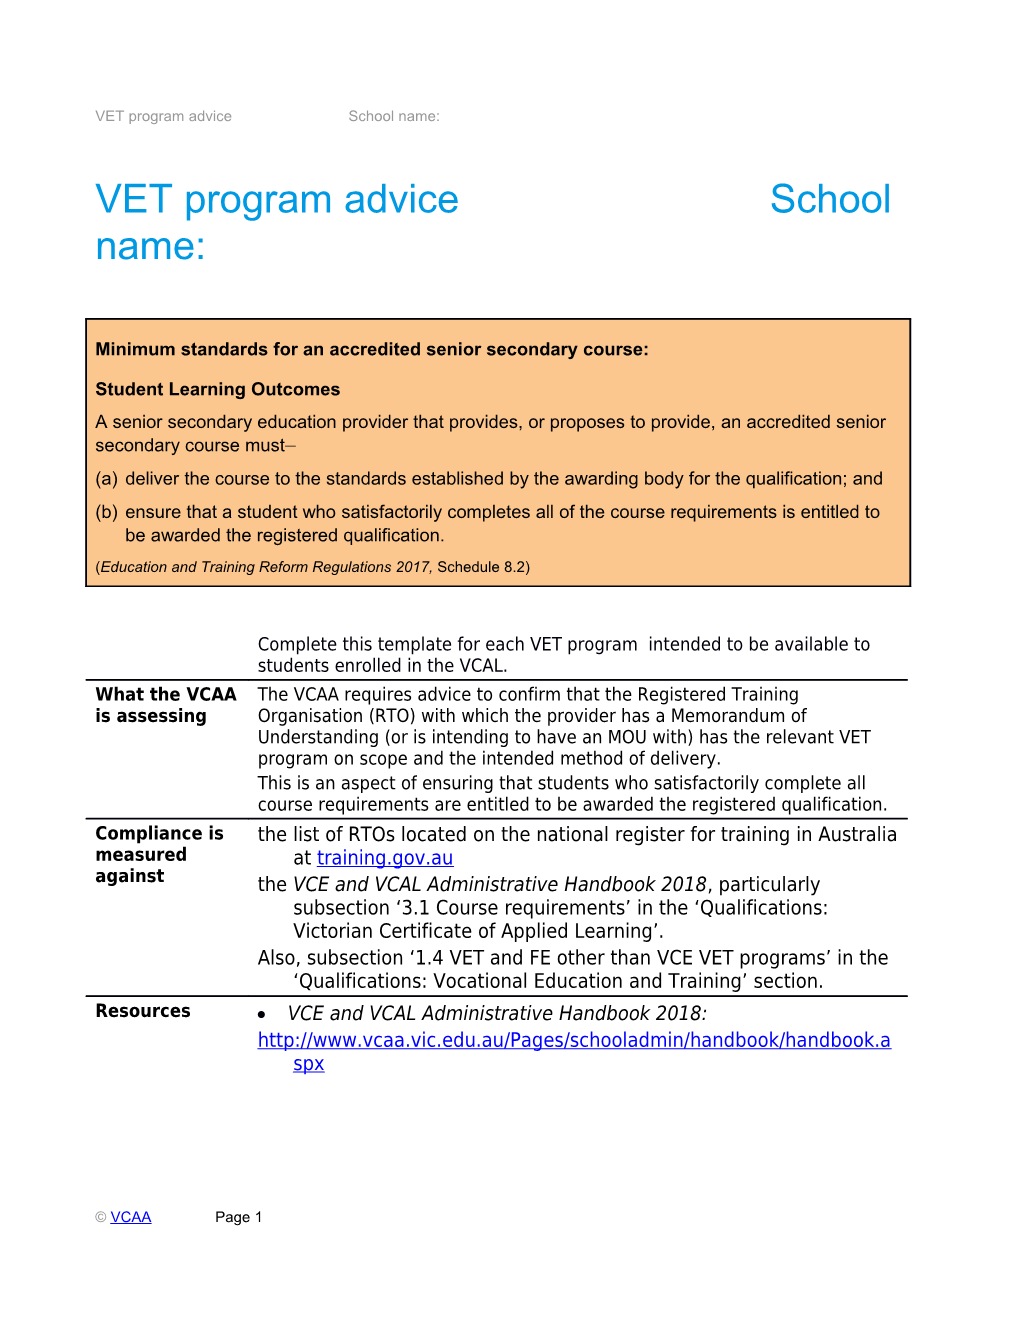 VET Program Advice School Name